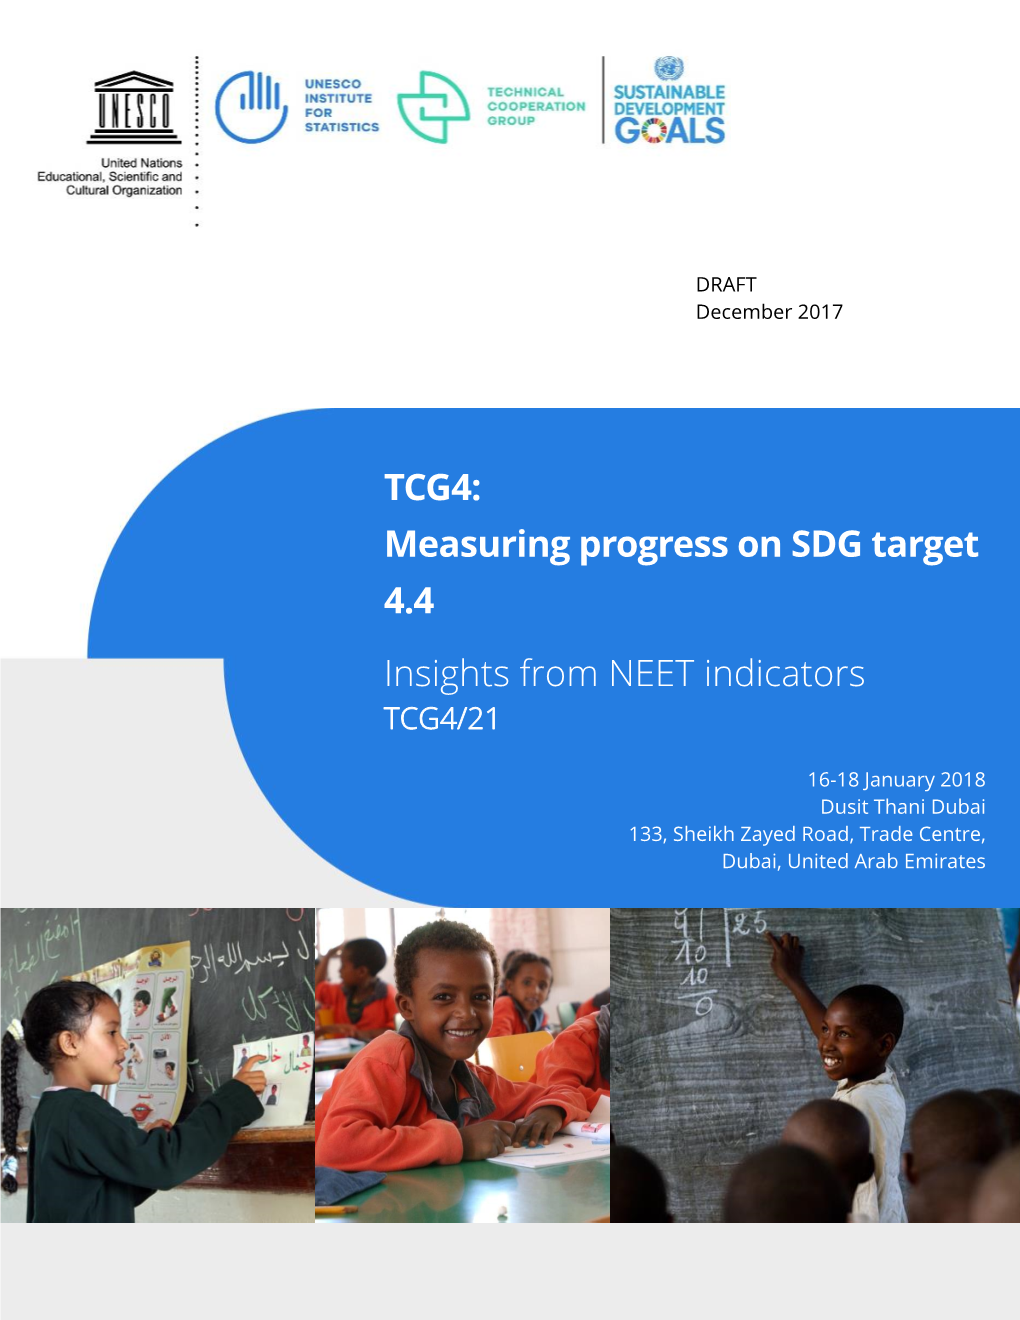 TCG4: Measuring Progress on SDG Target 4.4 Insights from NEET